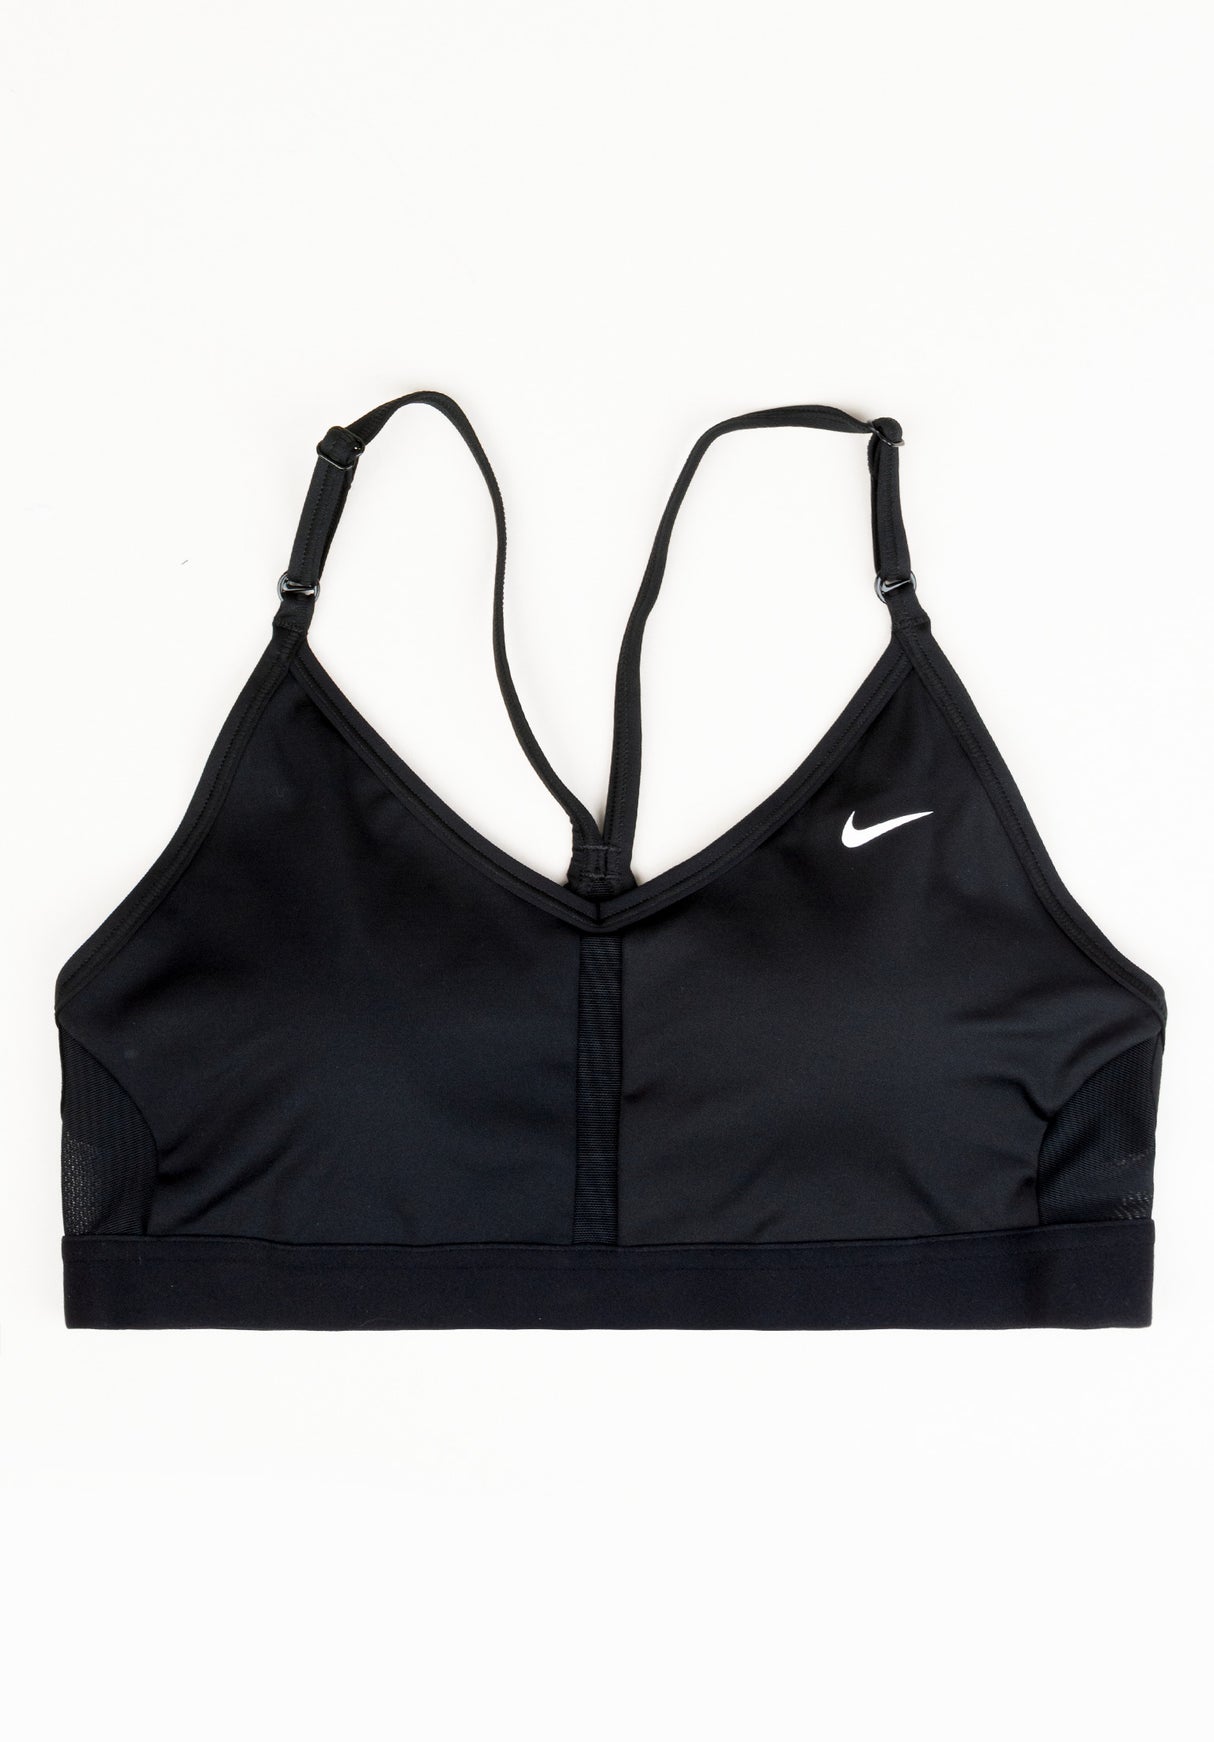 Nike Indy Nike SB Underwear in black-white for Women – TITUS